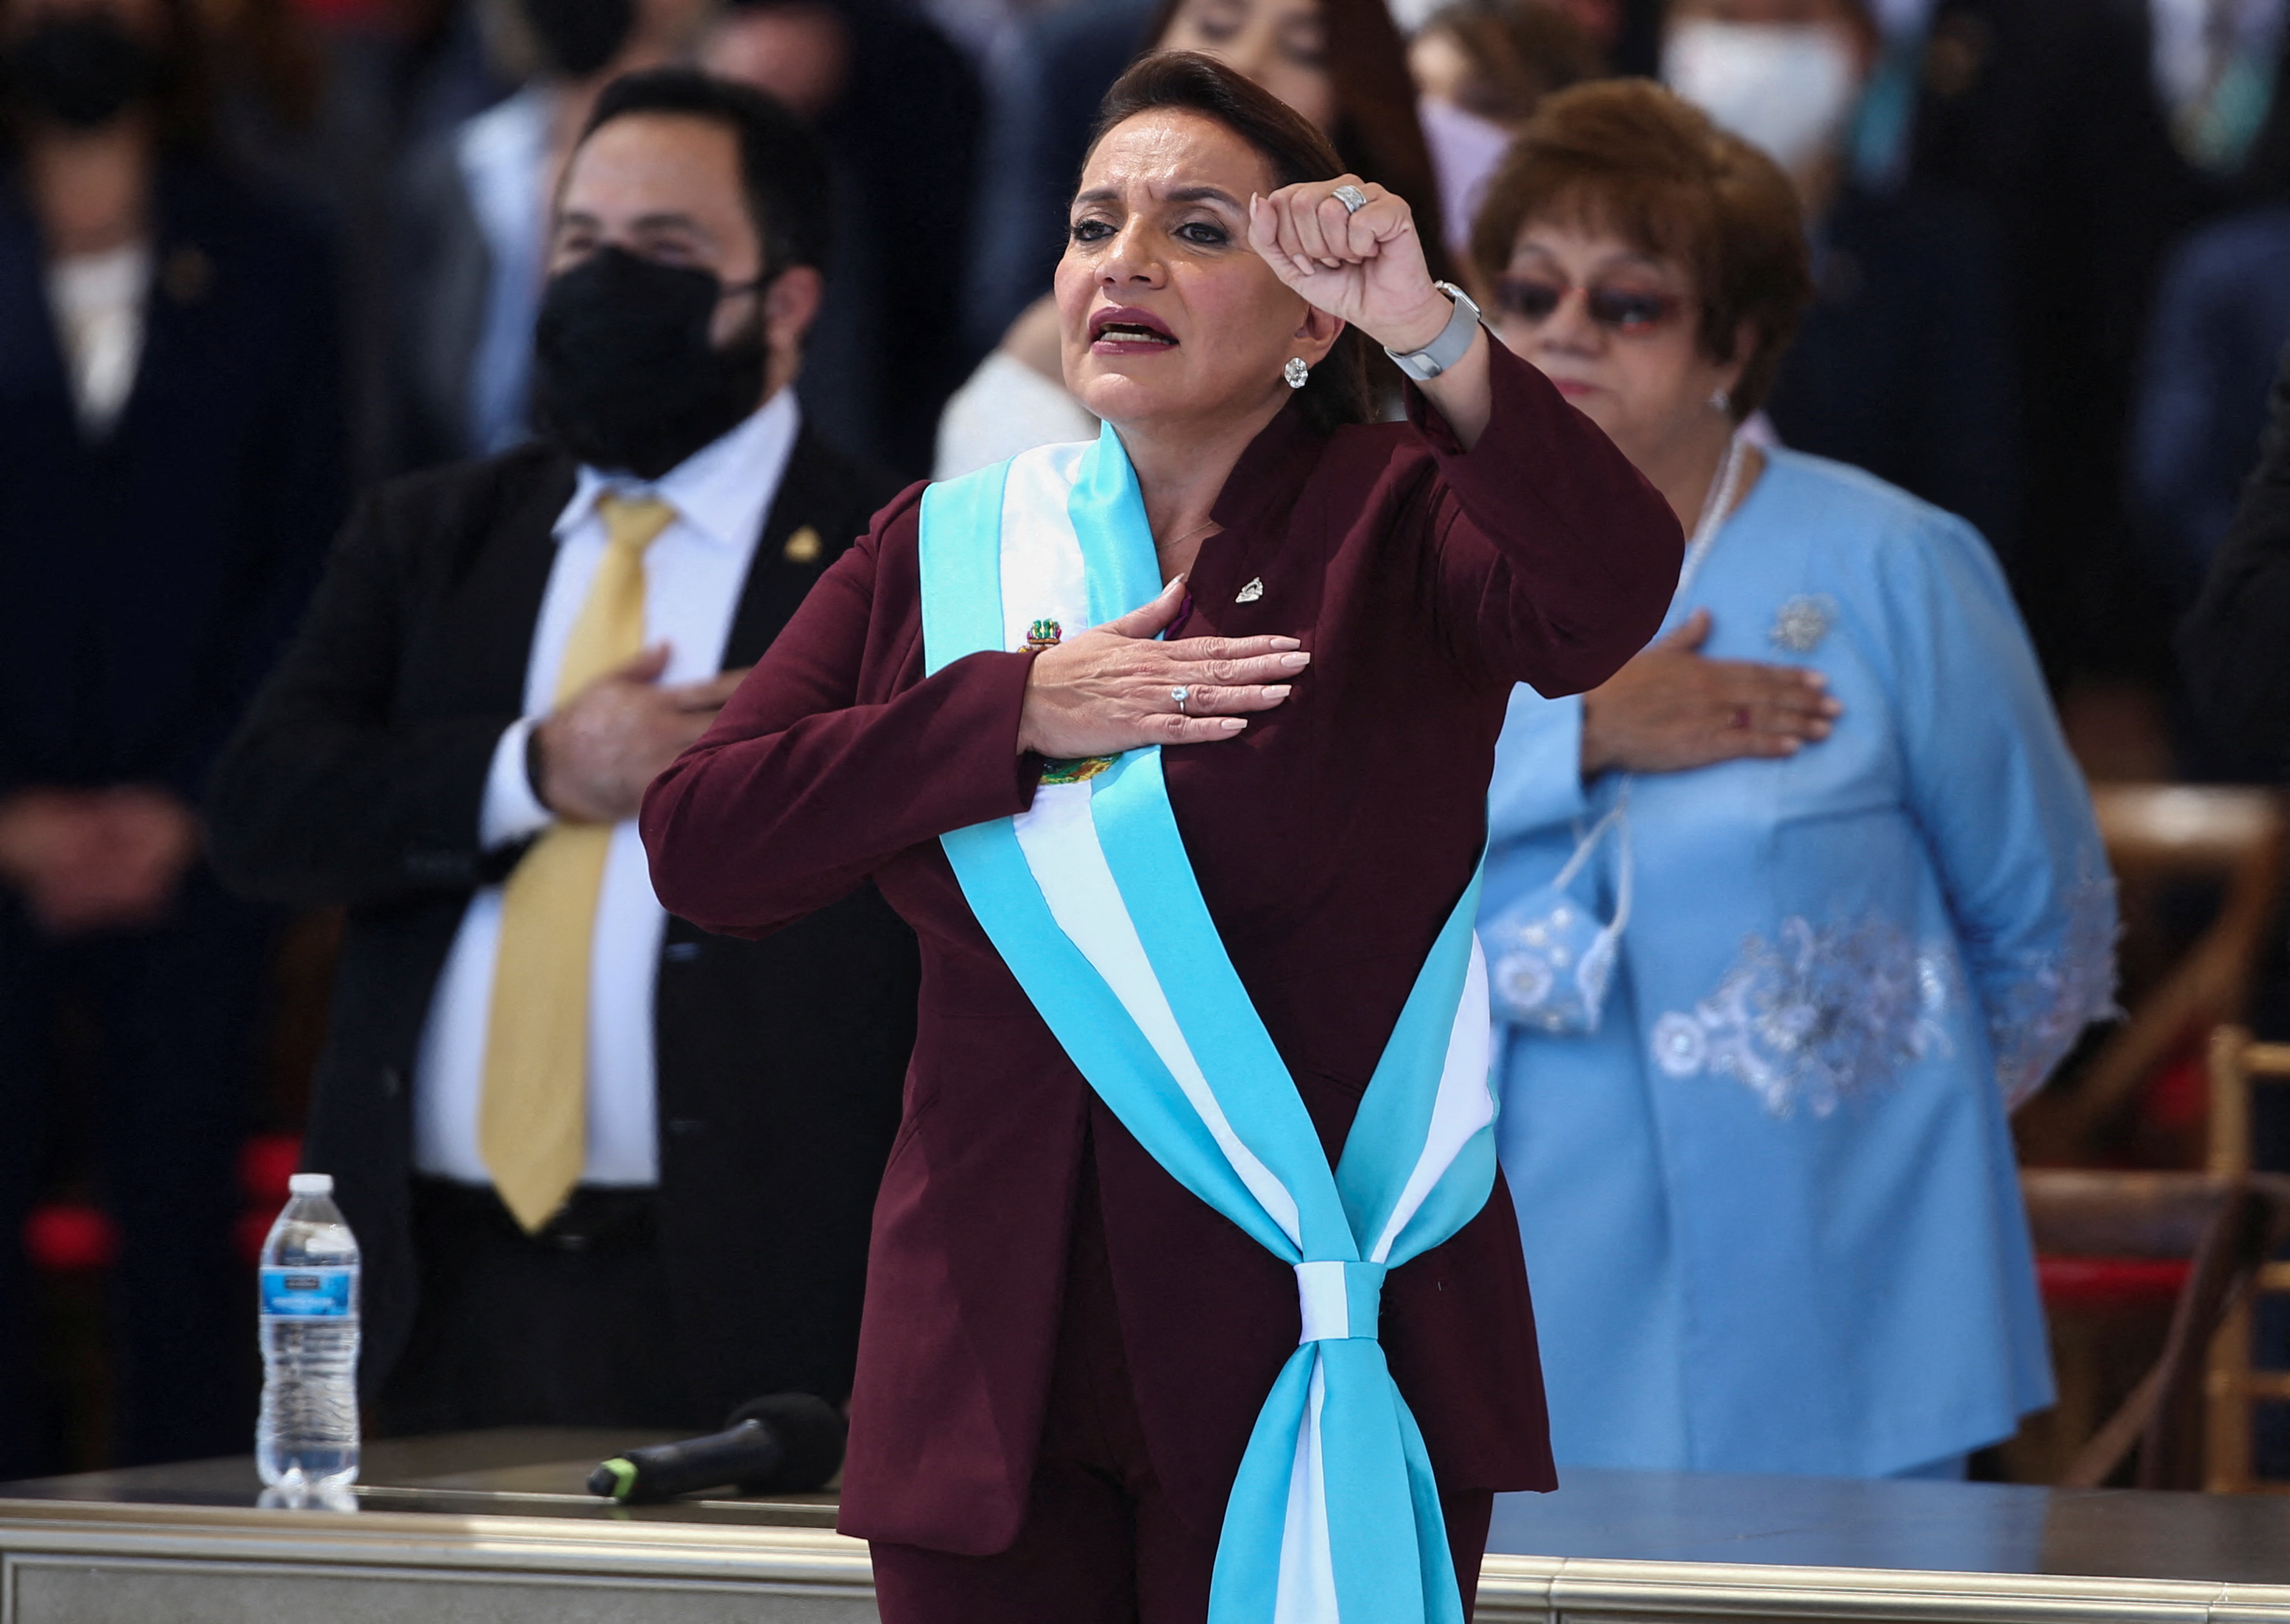 Swearing-in ceremony of new Honduran President Castro in Tegucigalpa